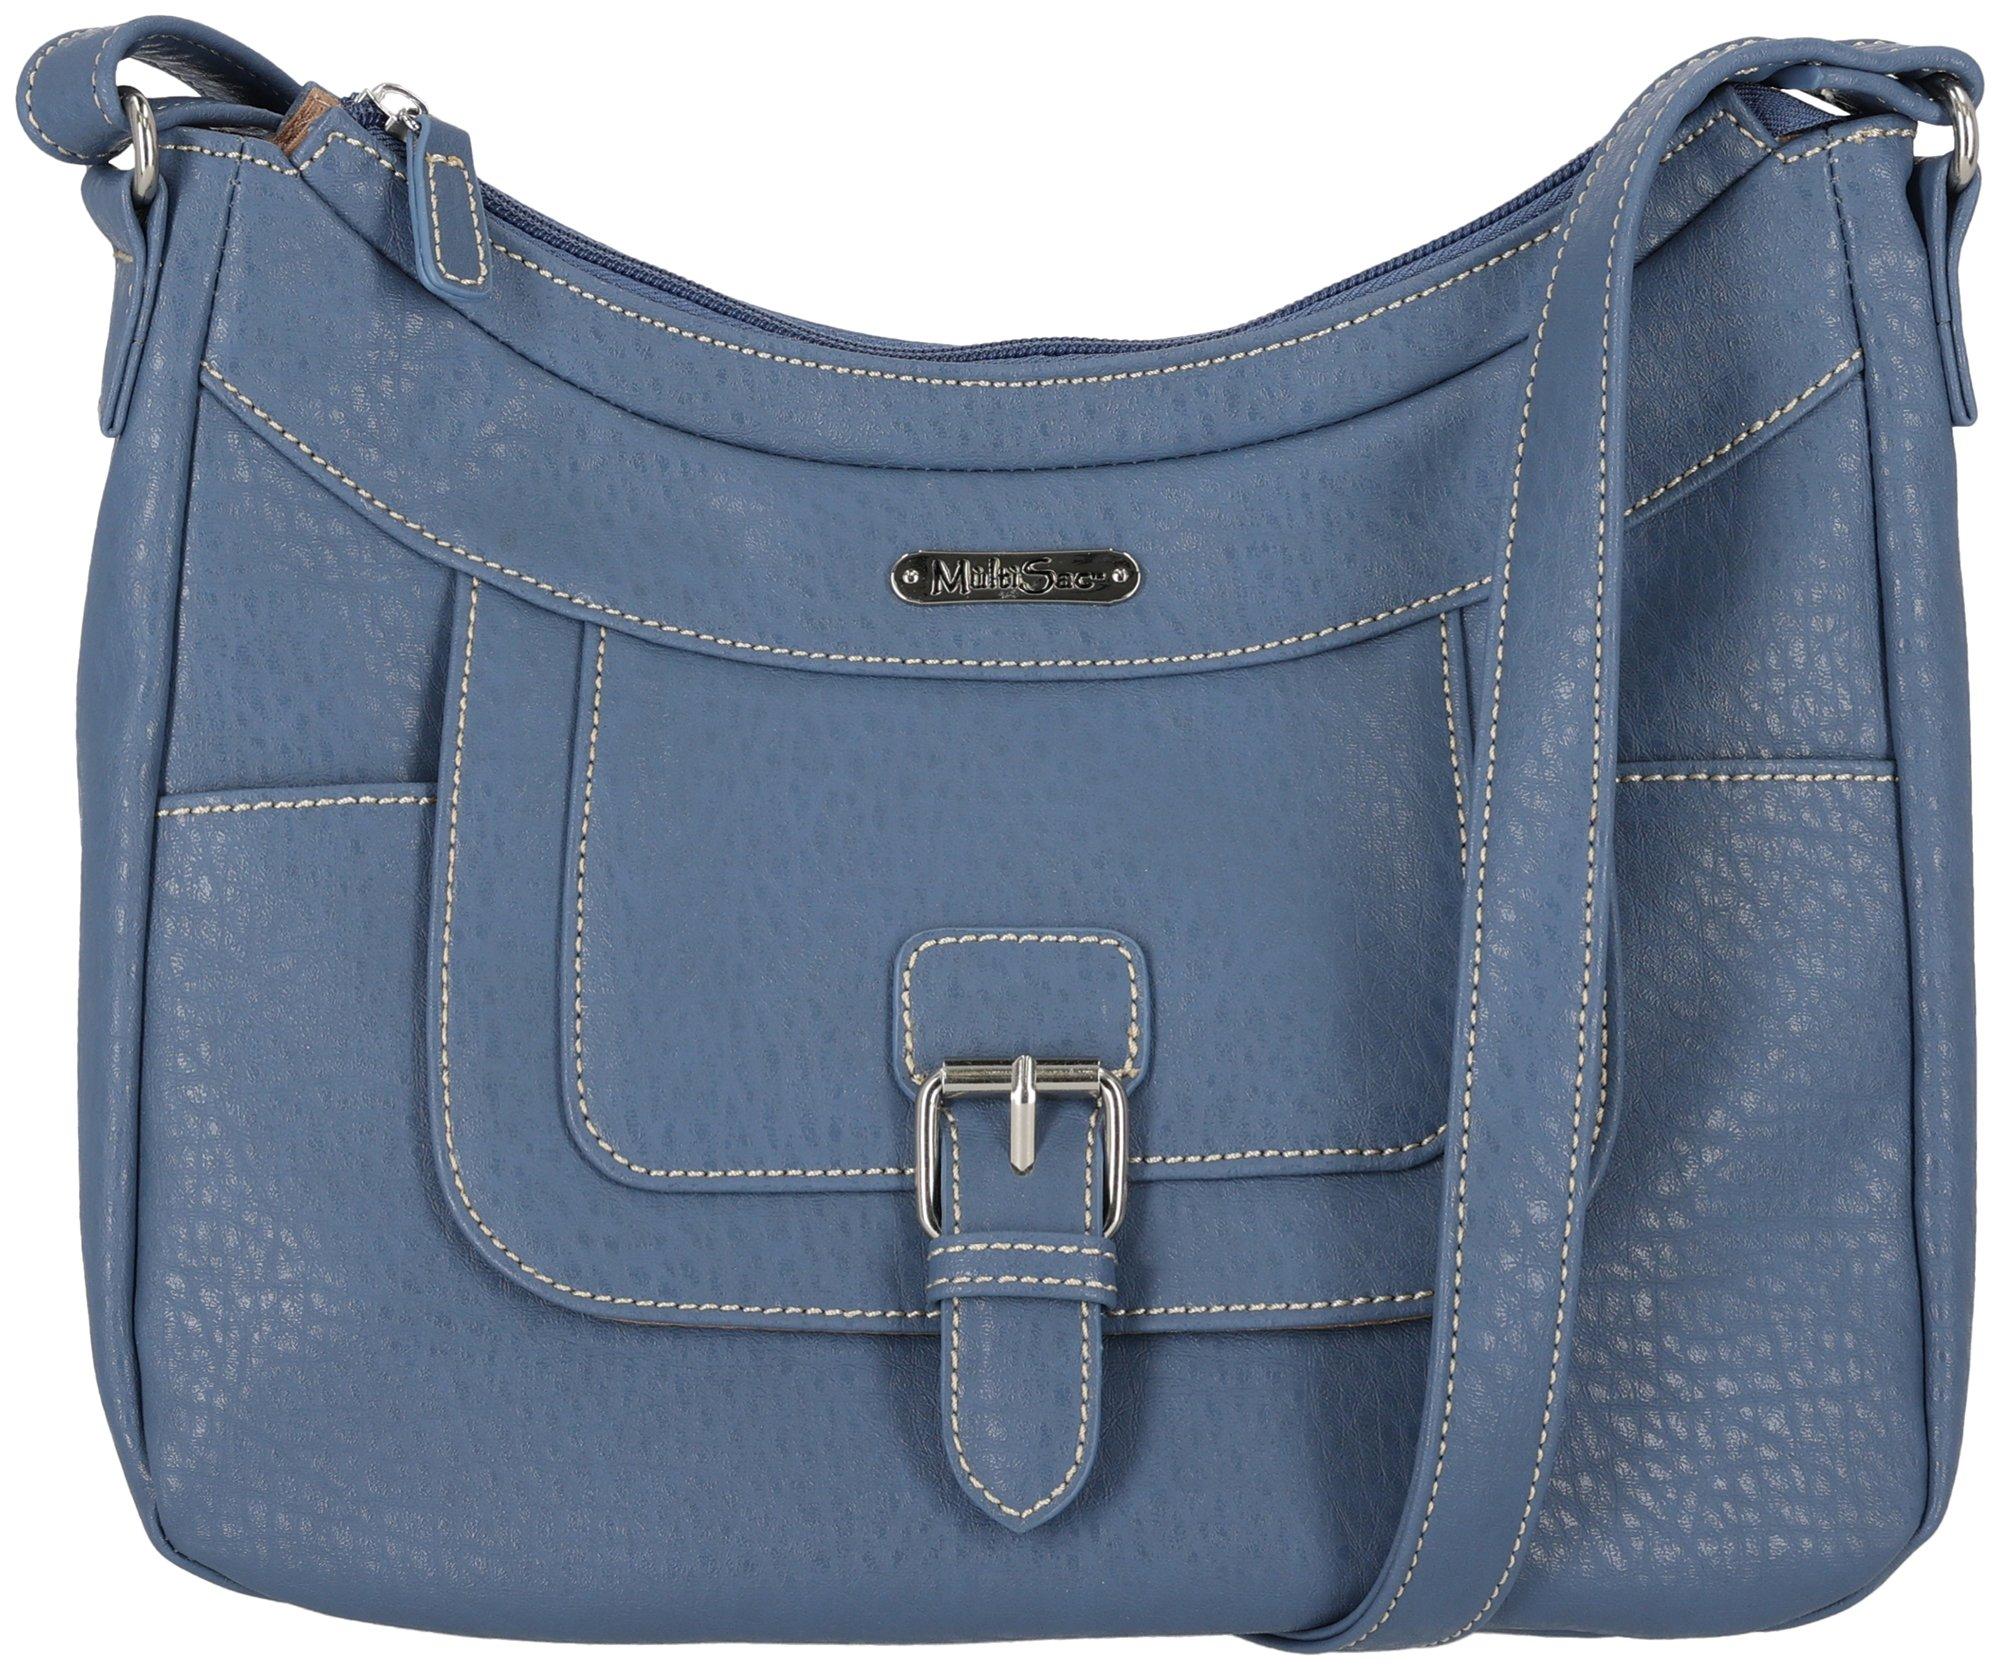 Women's MultiSac Zippy Crossbody Bag